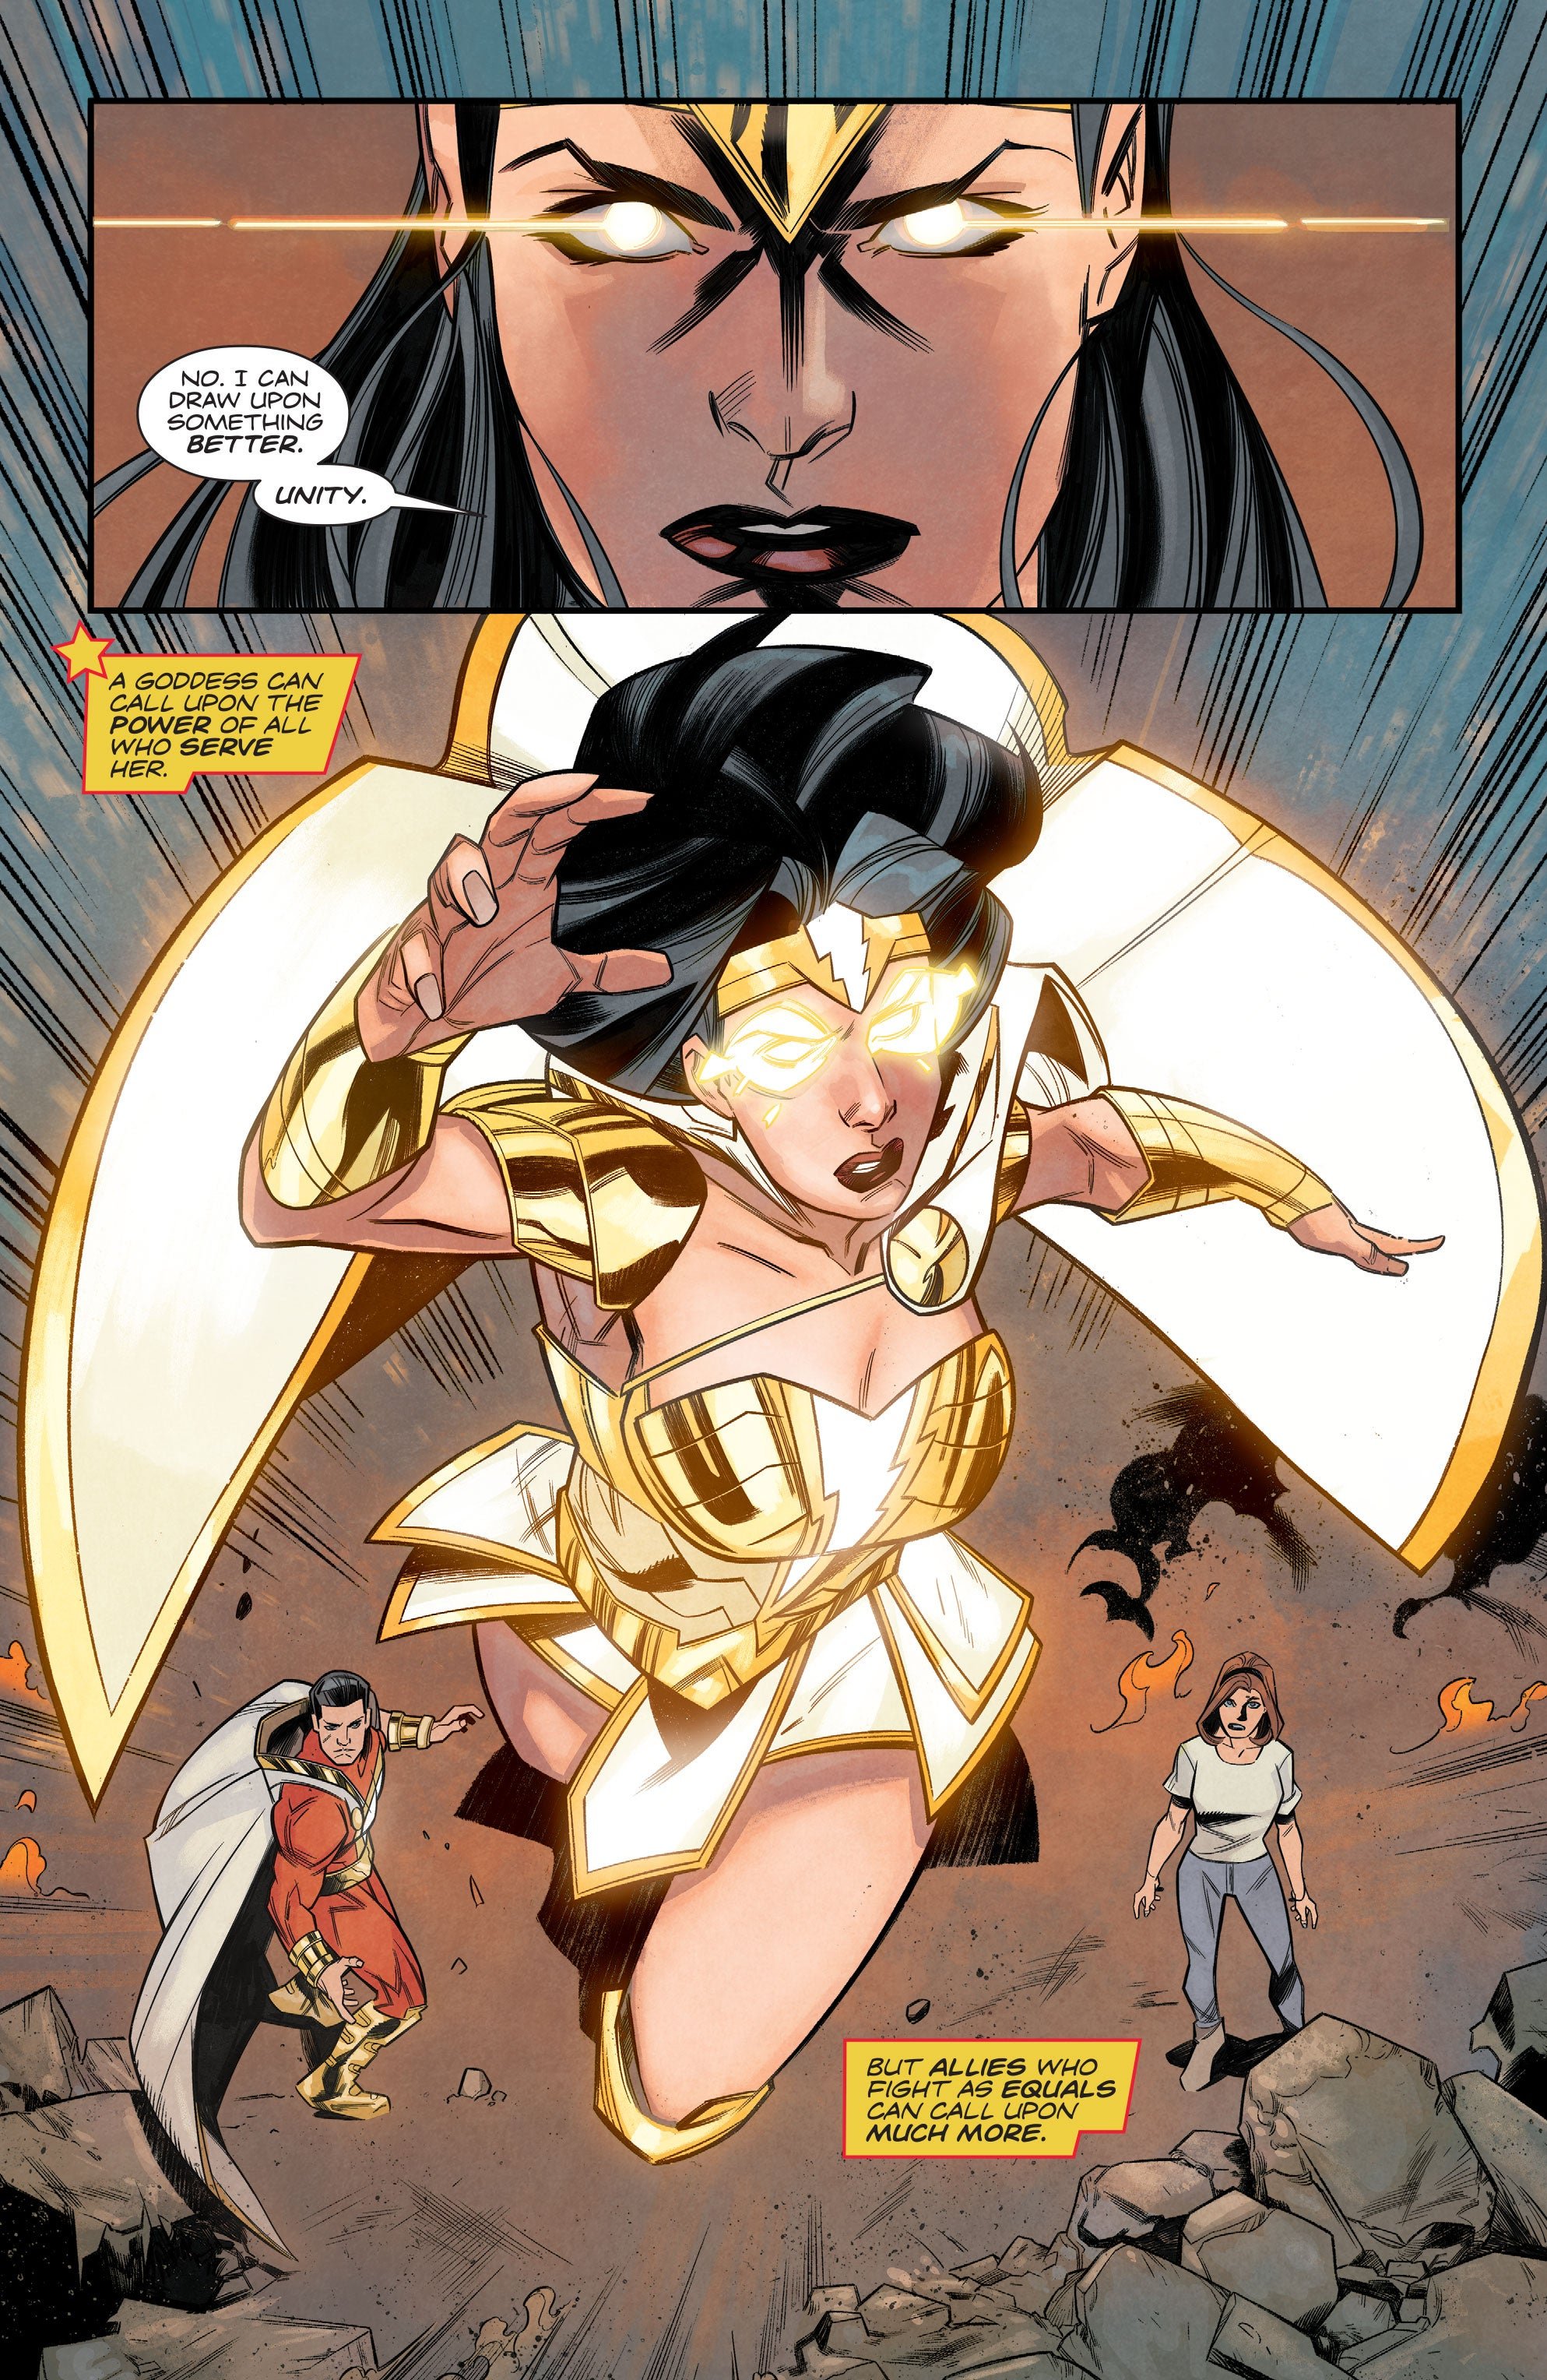 The Shazam-empowered Wonder Woman flies